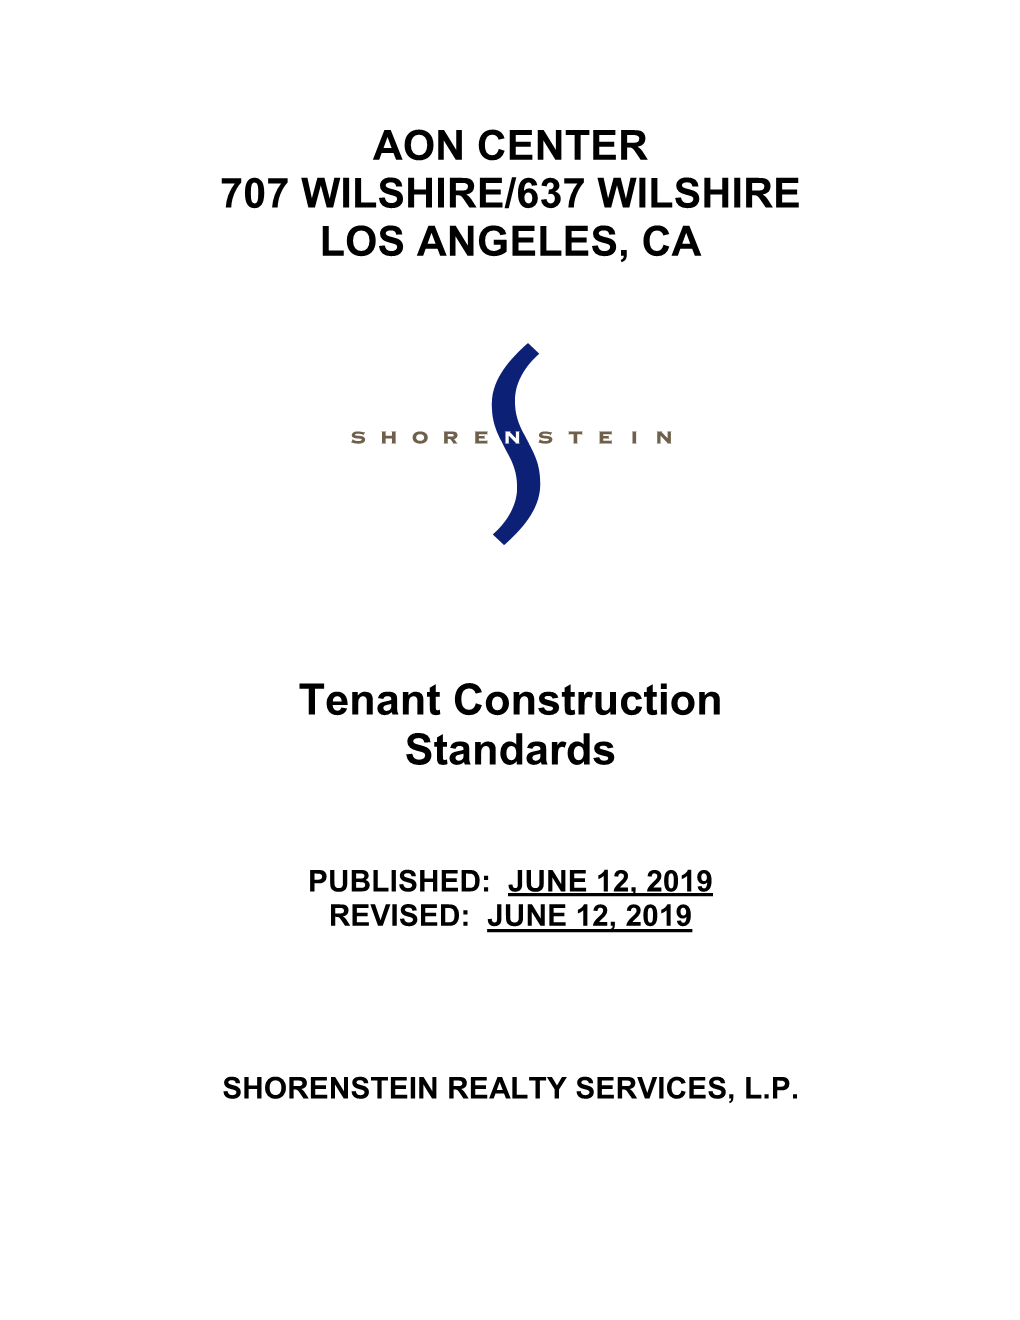 Tenant Construction Standards Template